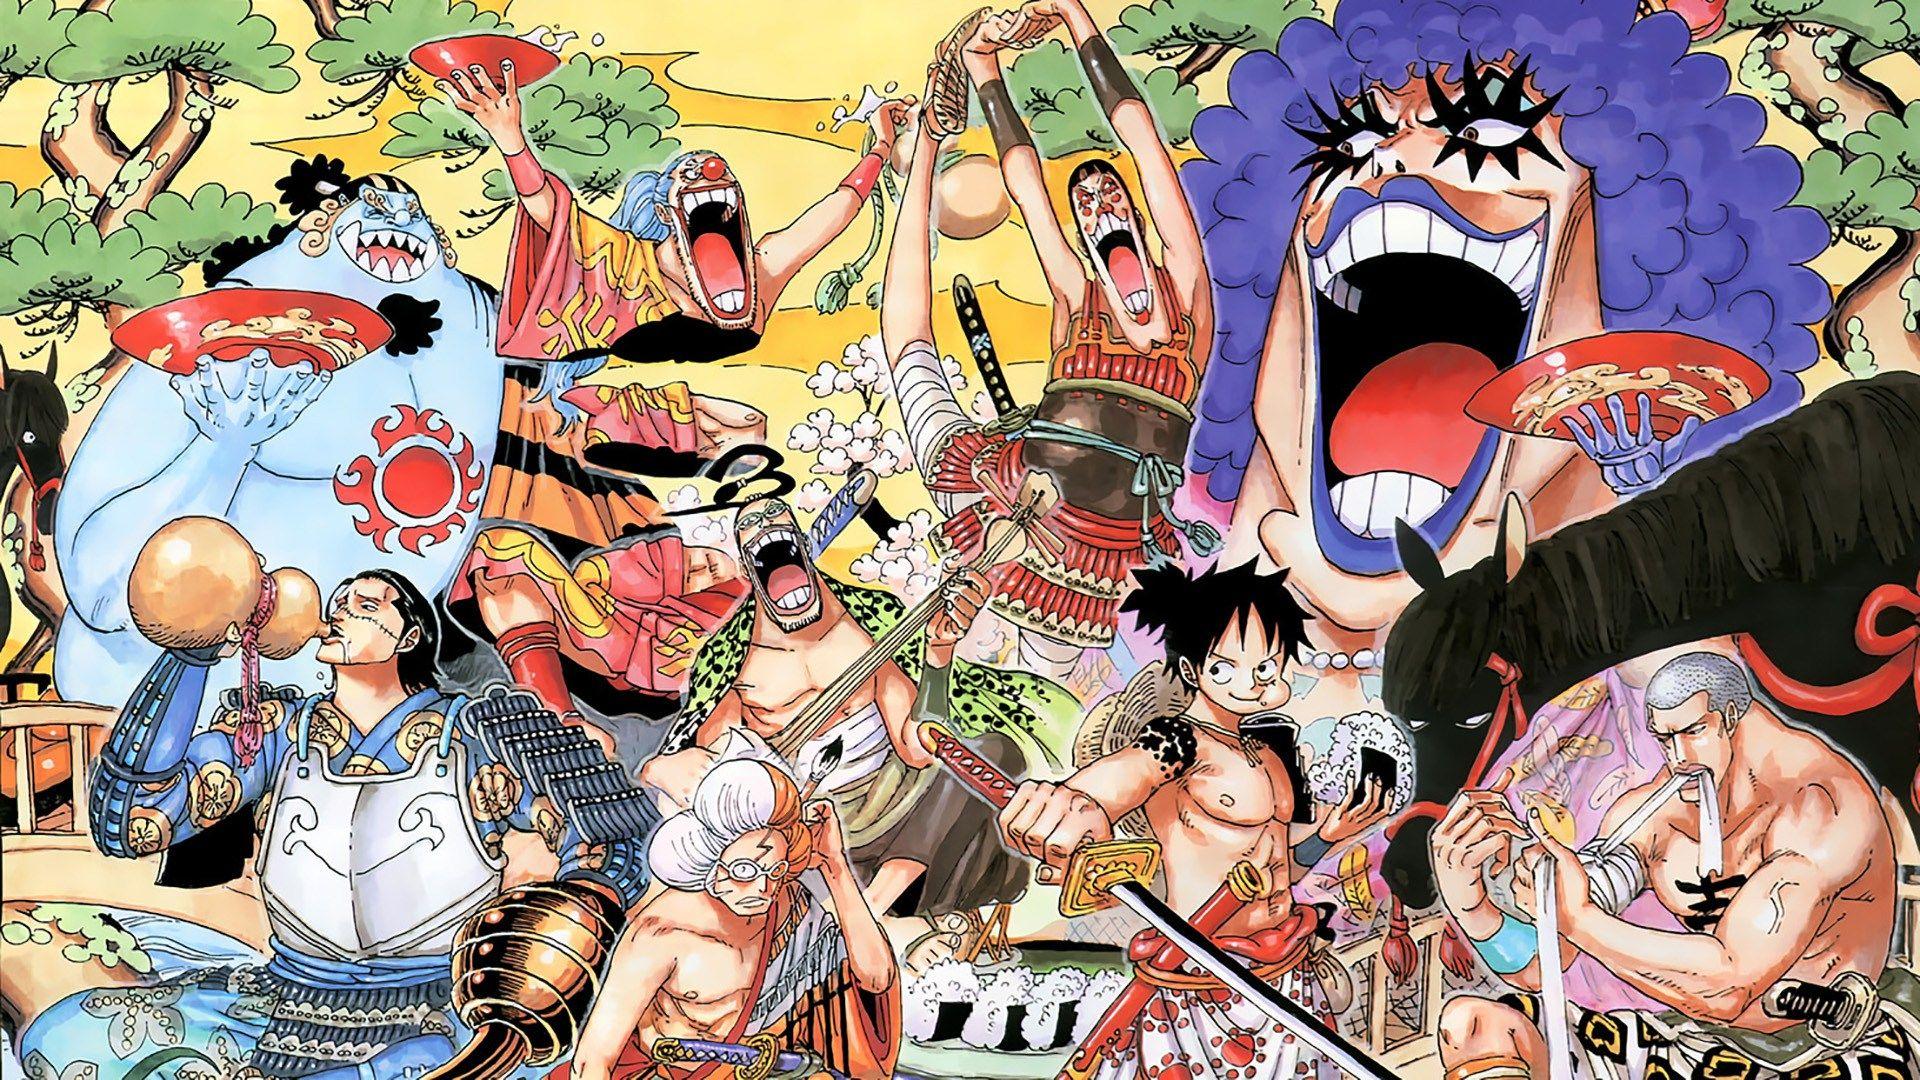 Manga One Piece 1920X1080 Wallpapers - Top Free Manga One Piece